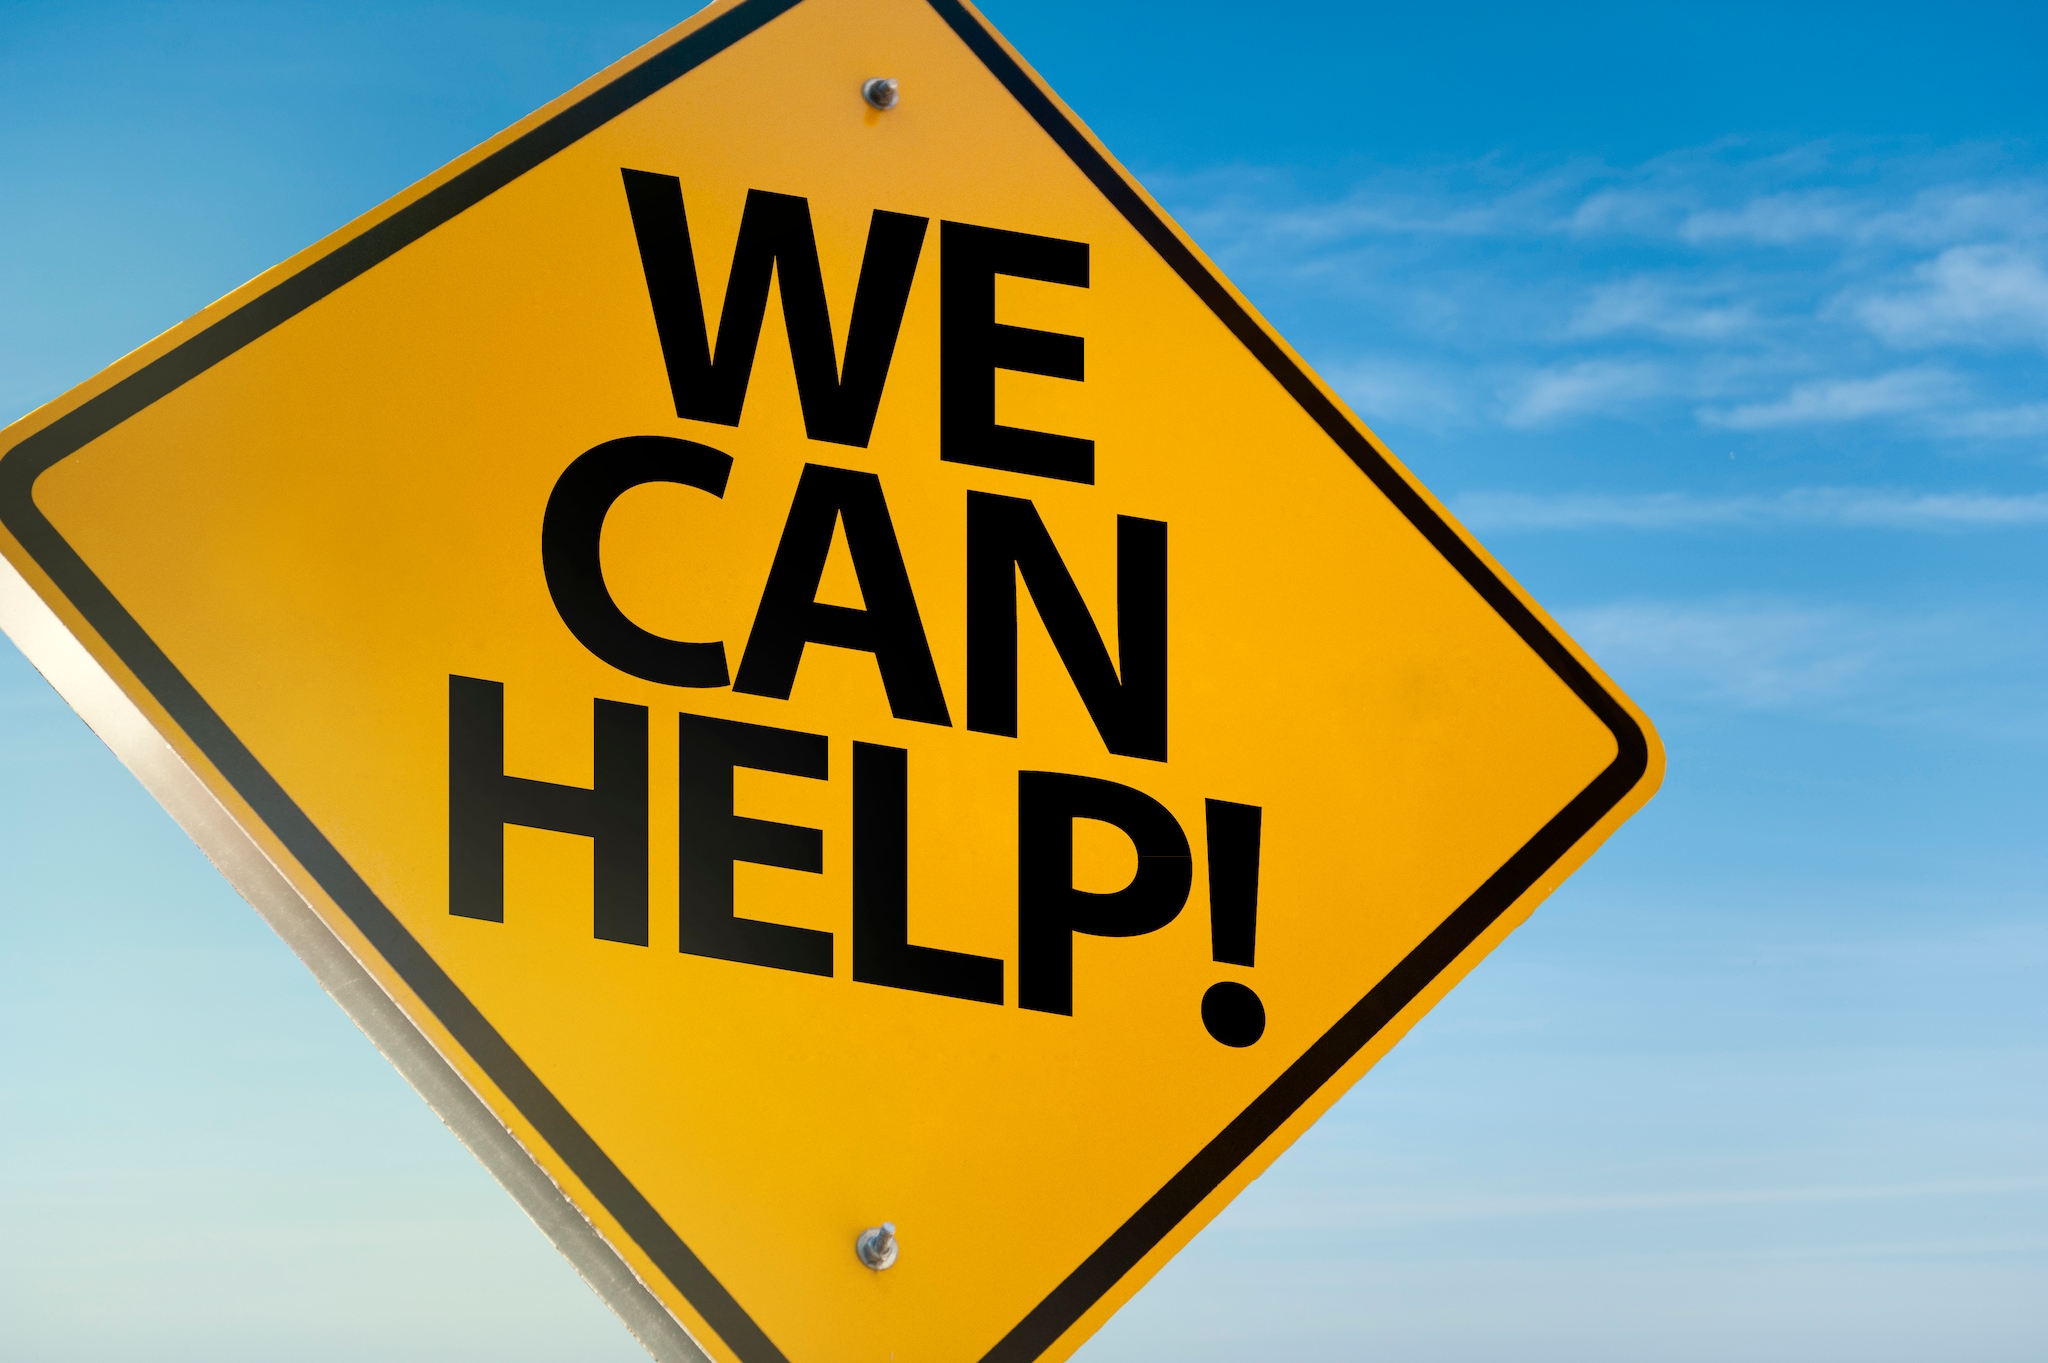 Znak, który mówi 'We Can Help!'We Can Help!'